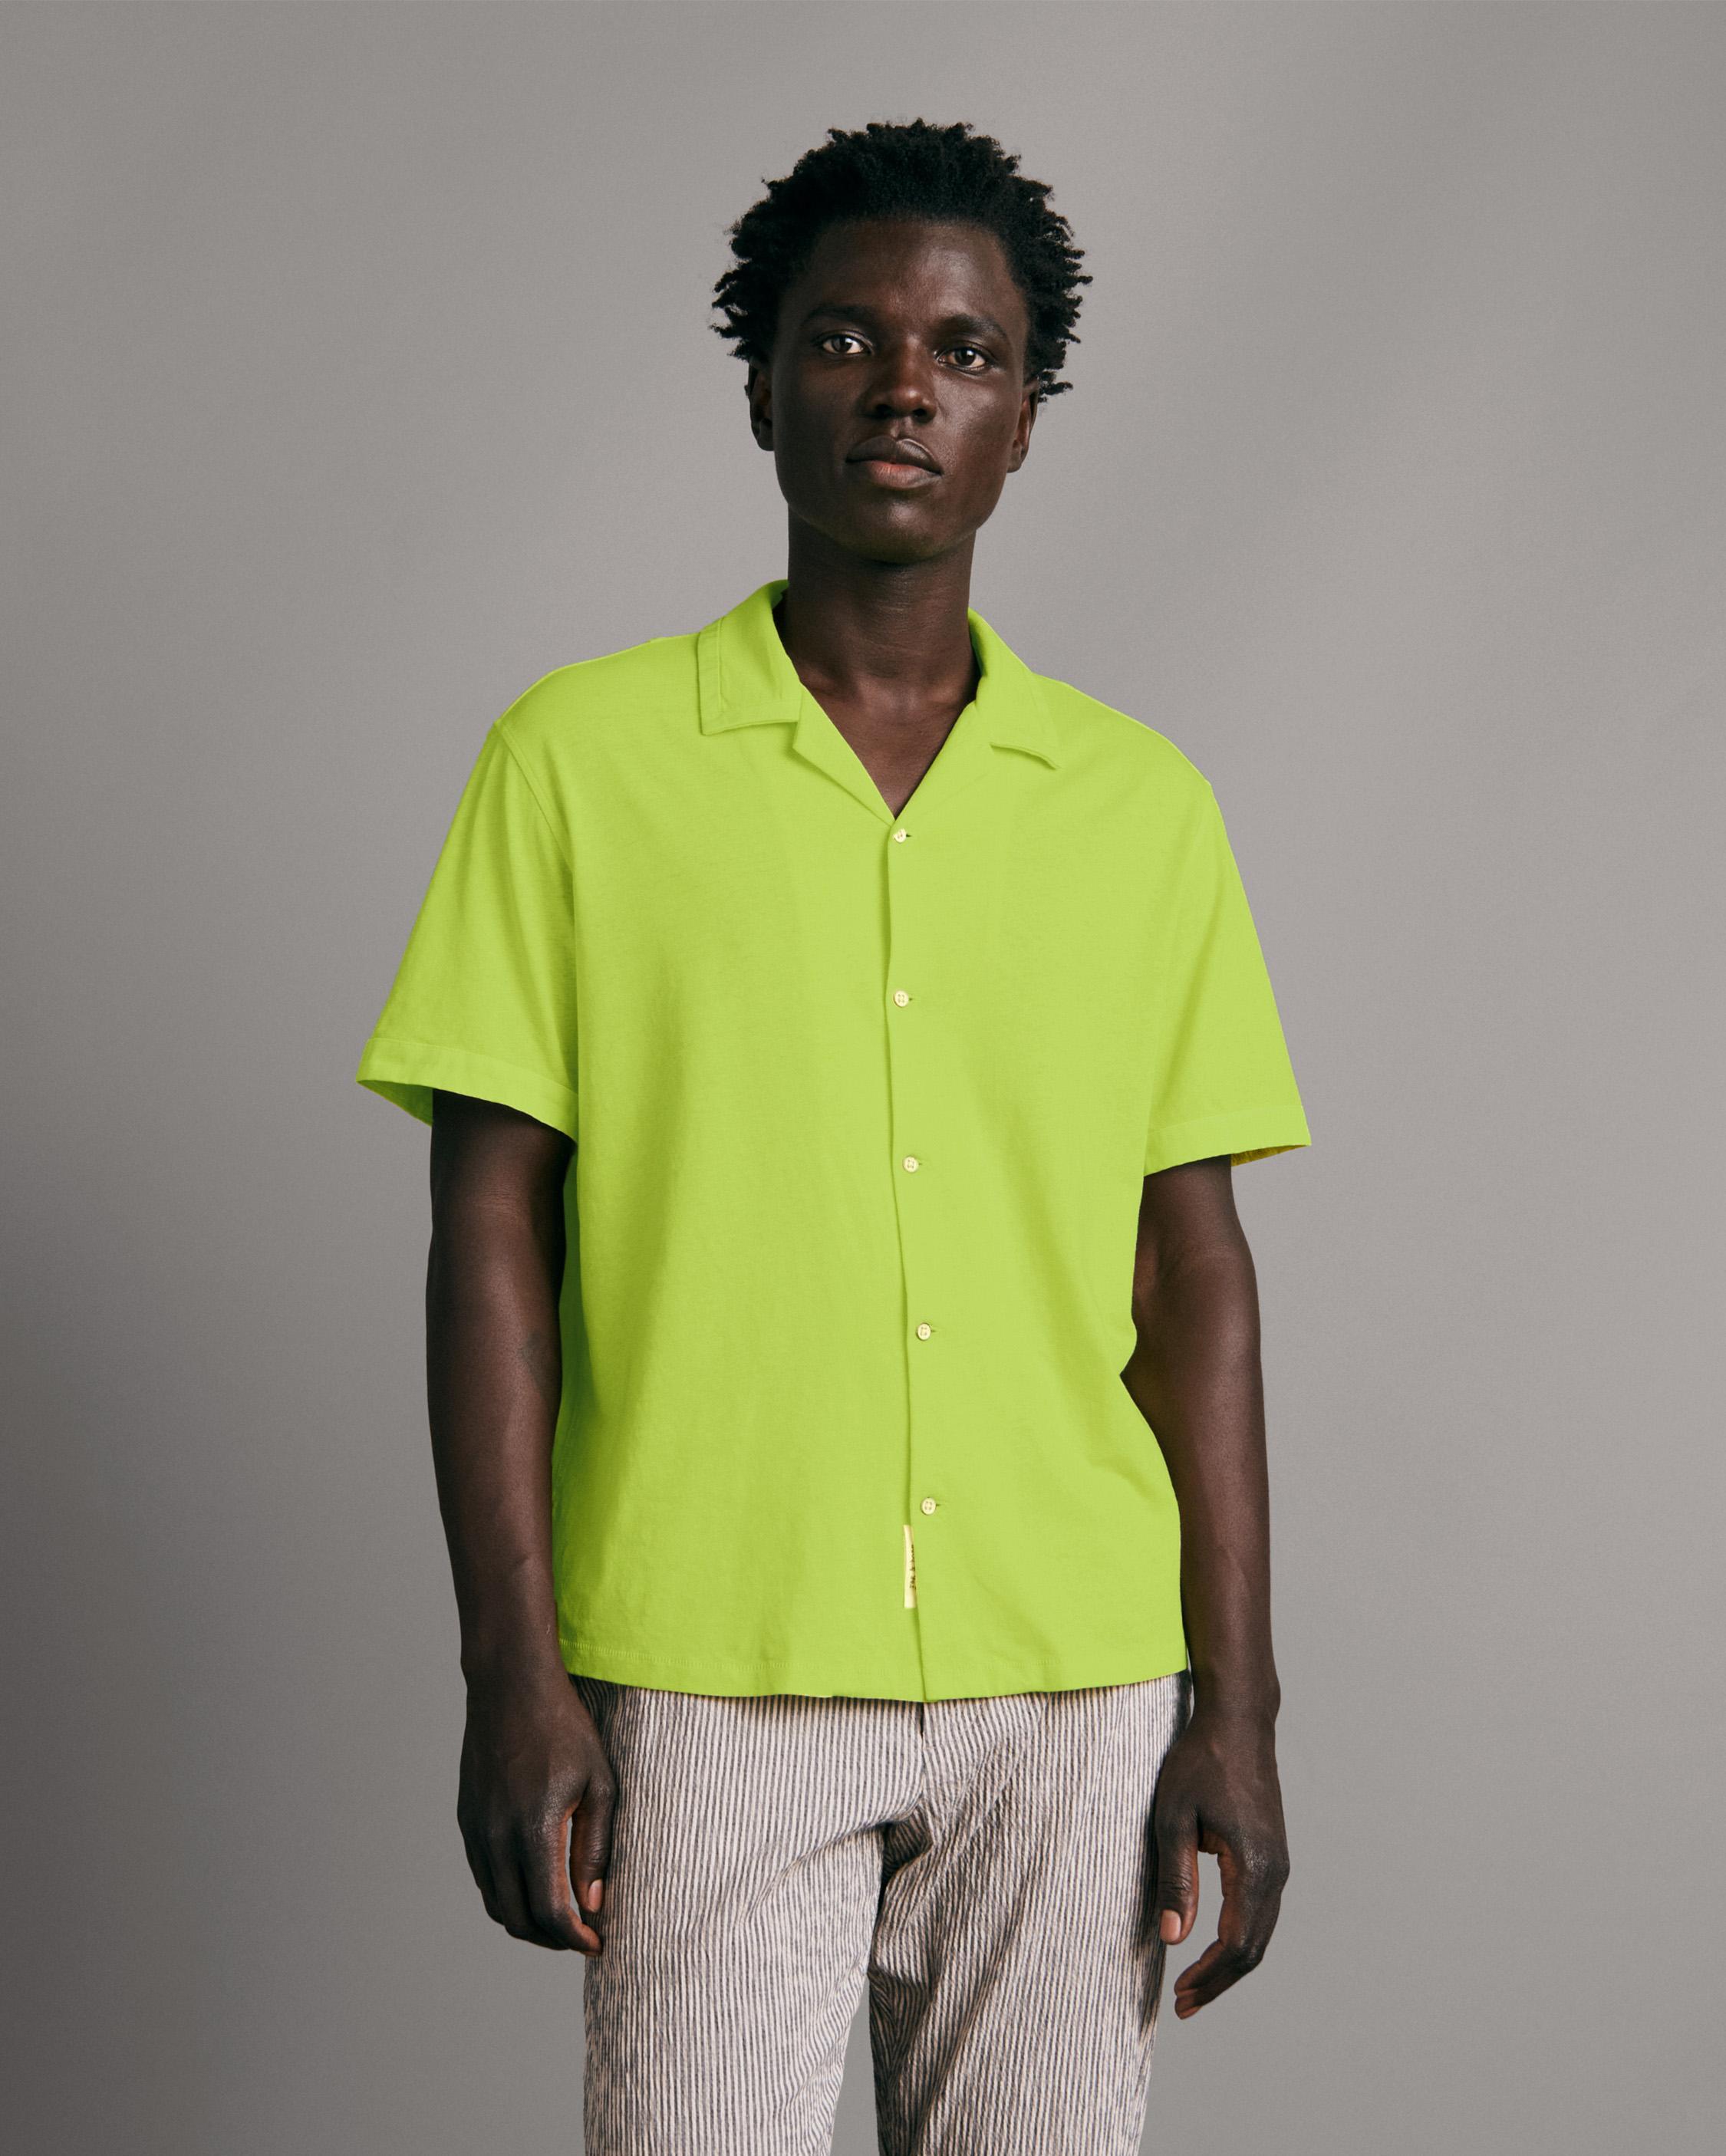 Rag & Bone Avery Linen Knit Shirt in Yellow (Metallic) for Men - Save 49% |  Lyst